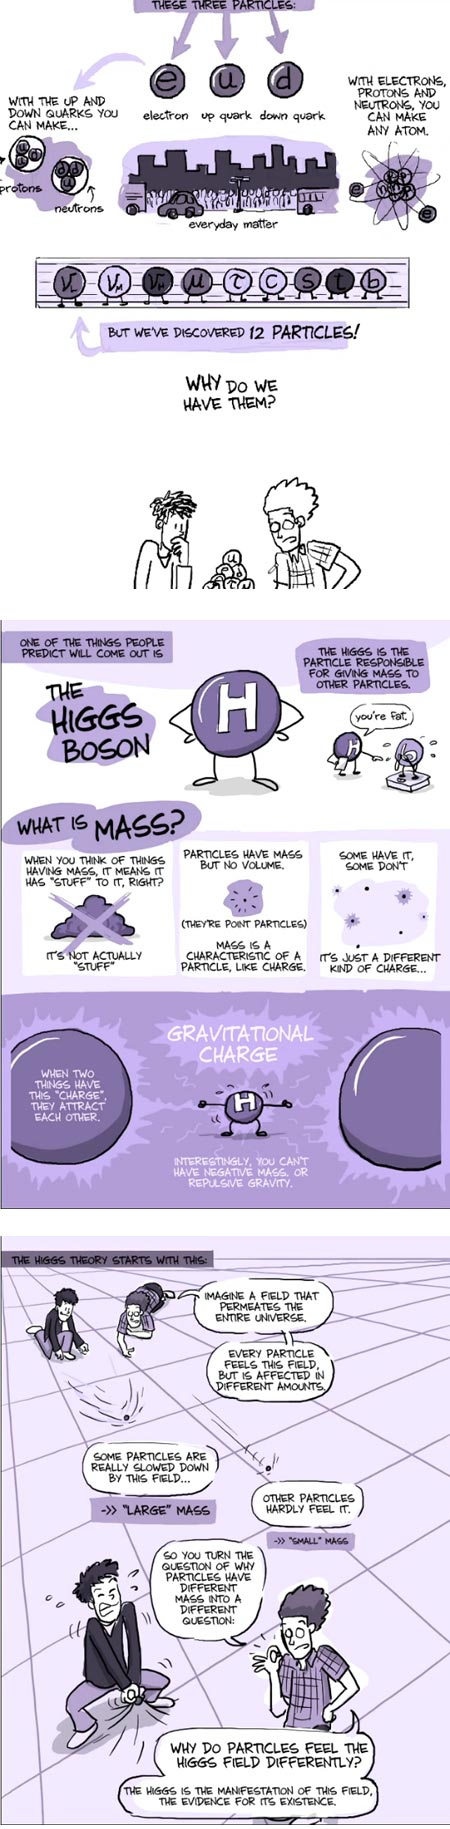 The Higgs Boson Explained, PHD Comics, Jorge Cham